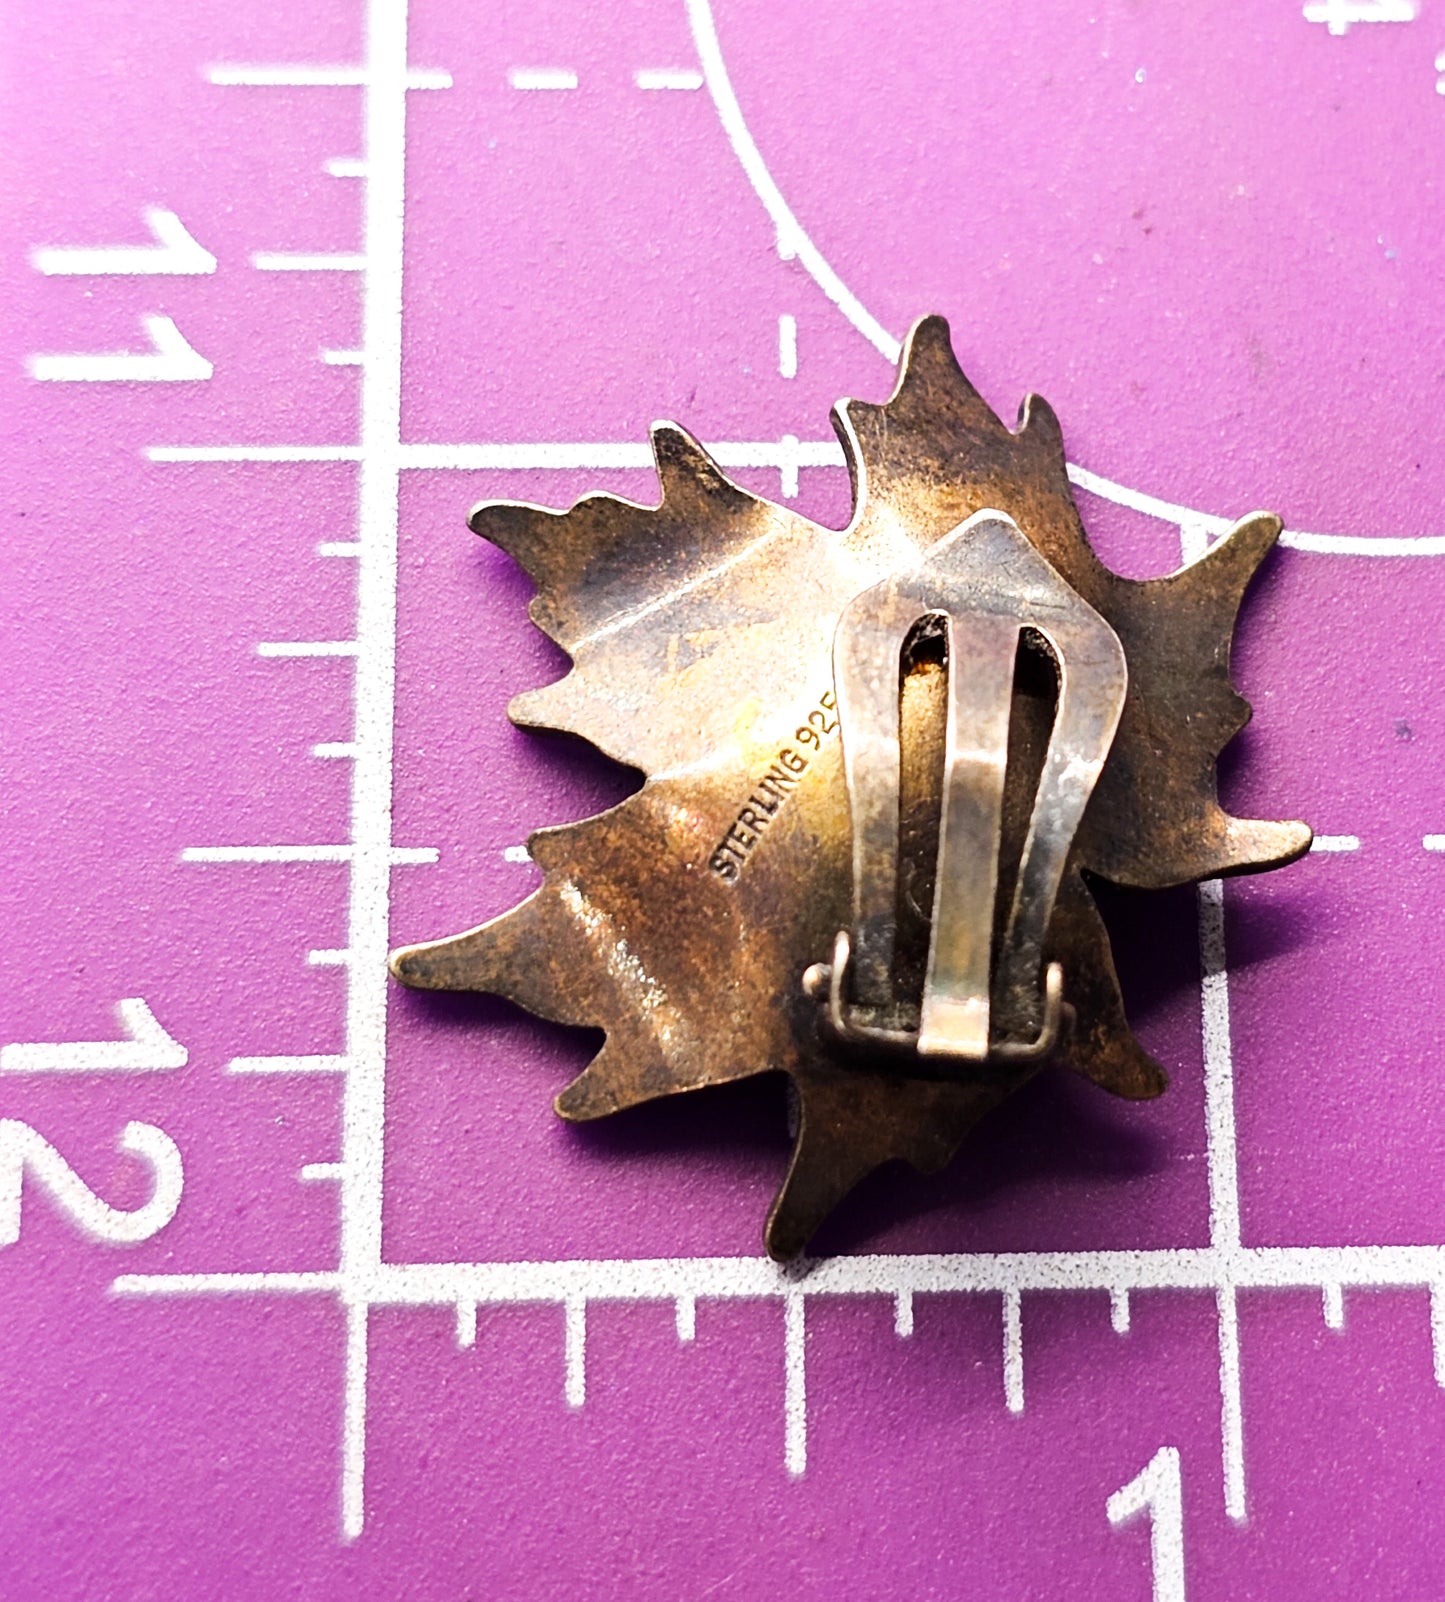 Hroar Prydz Norway enamel sterling silver maple leaf vintage clip on earrings